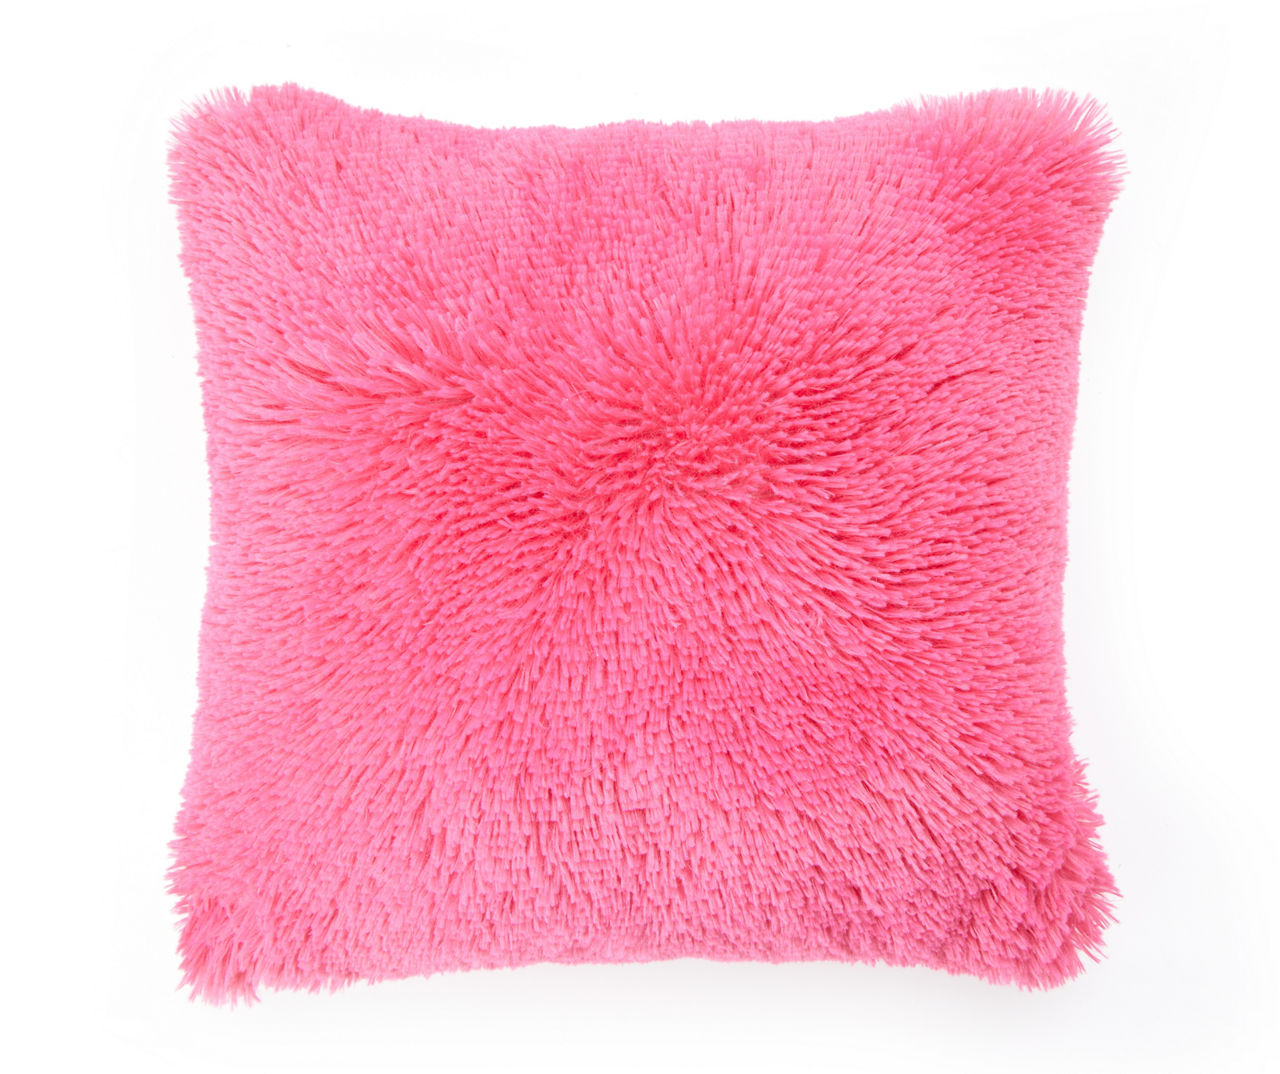 Real Living Euphoric Expression Cabaret Pink Faux Fur Throw Pillow ...